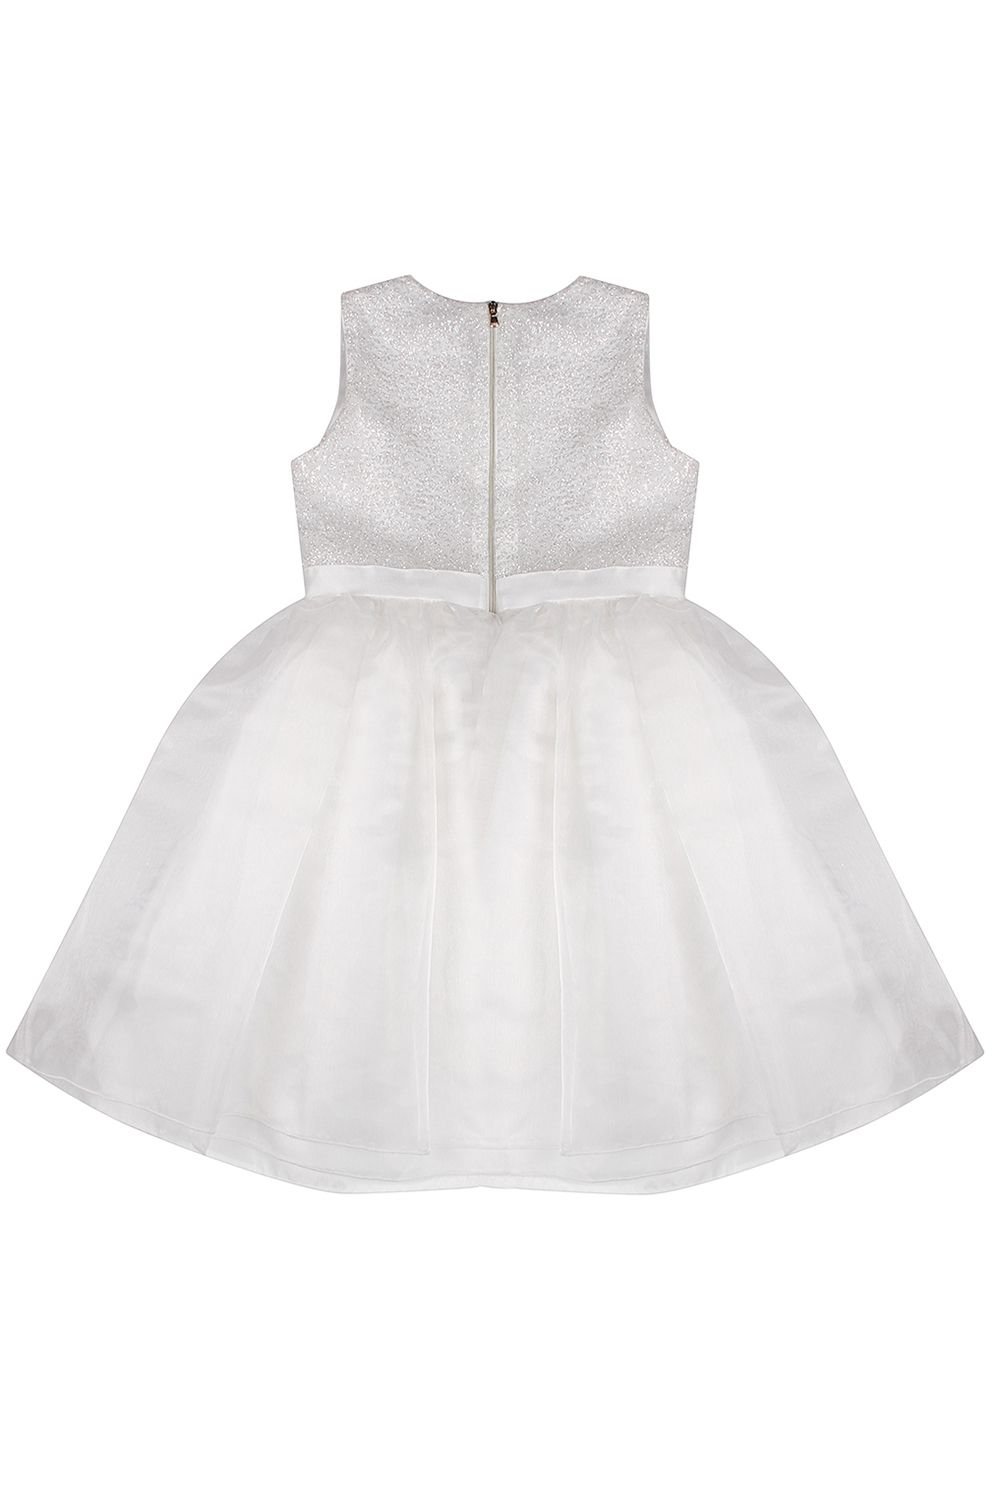 Платье Y-clu', размер 8, цвет белый Y13186 - фото 2